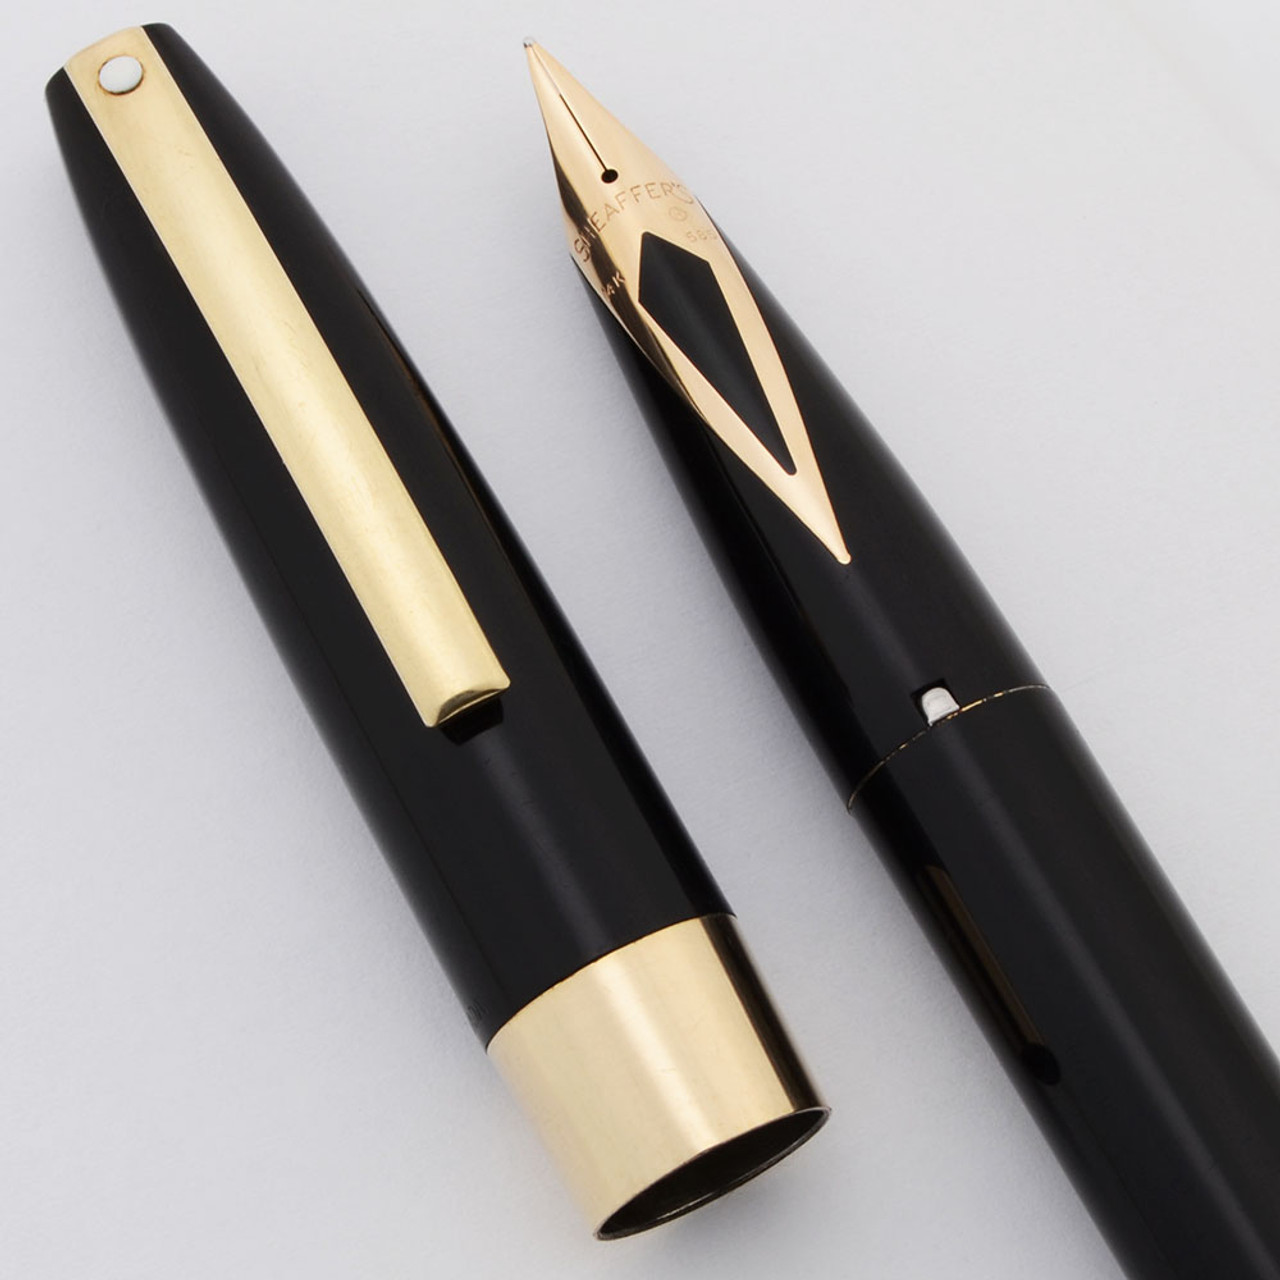 Sheaffer Imperial IV Fountain Pen (1960s, Canada) - Black w/GP Trim, Touchdown, Medium 14k Nib (Excellent, Restored)